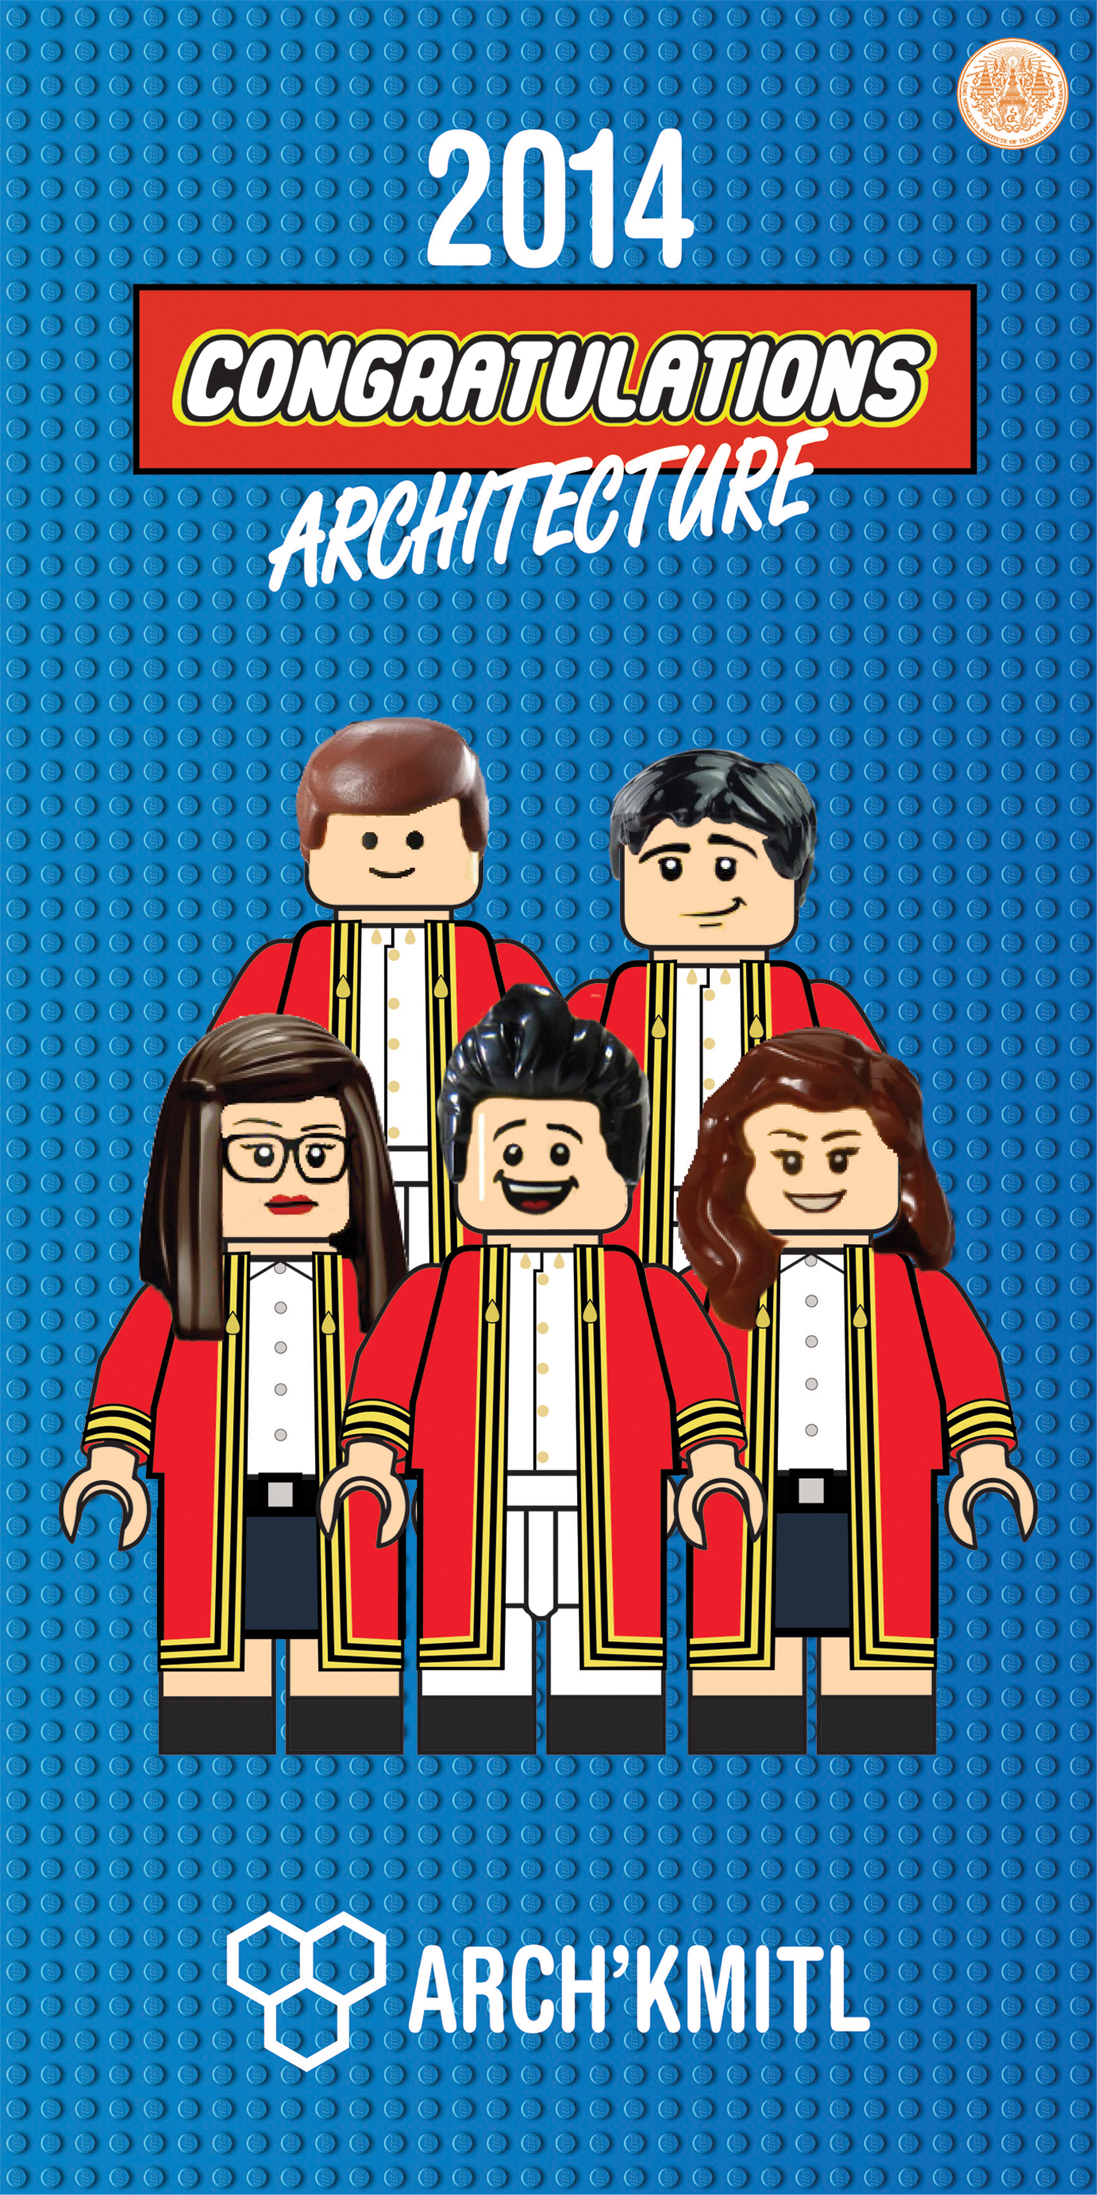 LEGO poster design